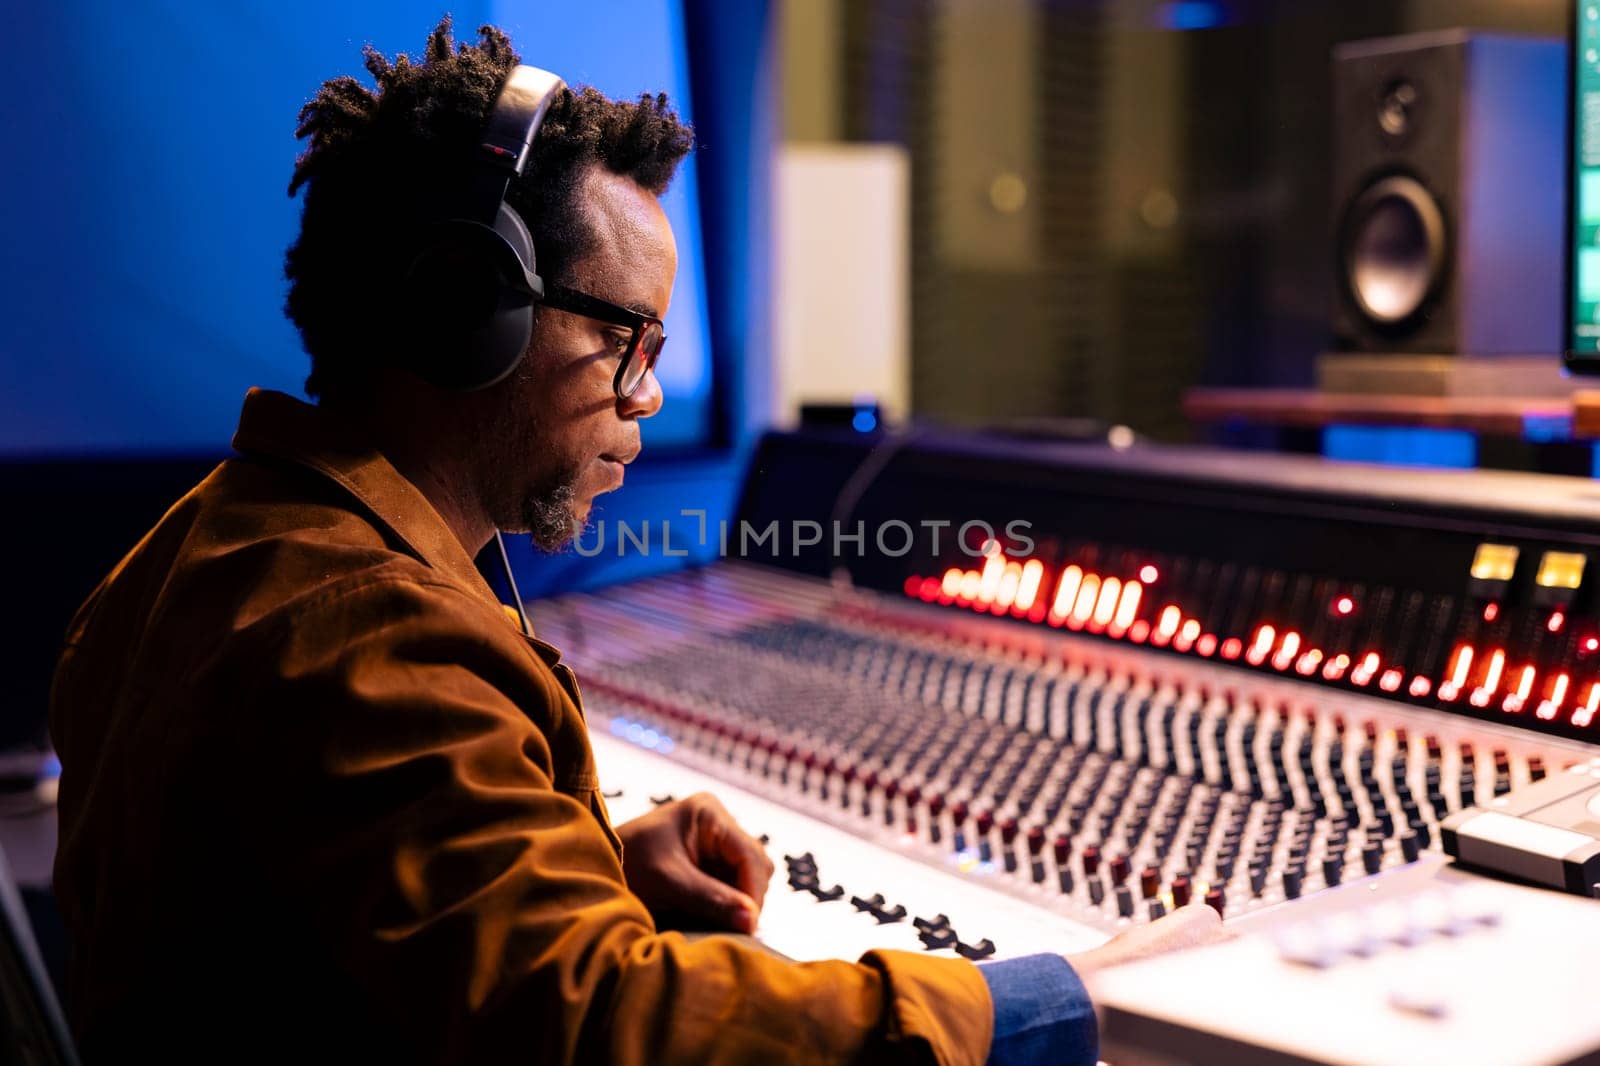 African american audio expert editing tracks in professional recording studio by DCStudio